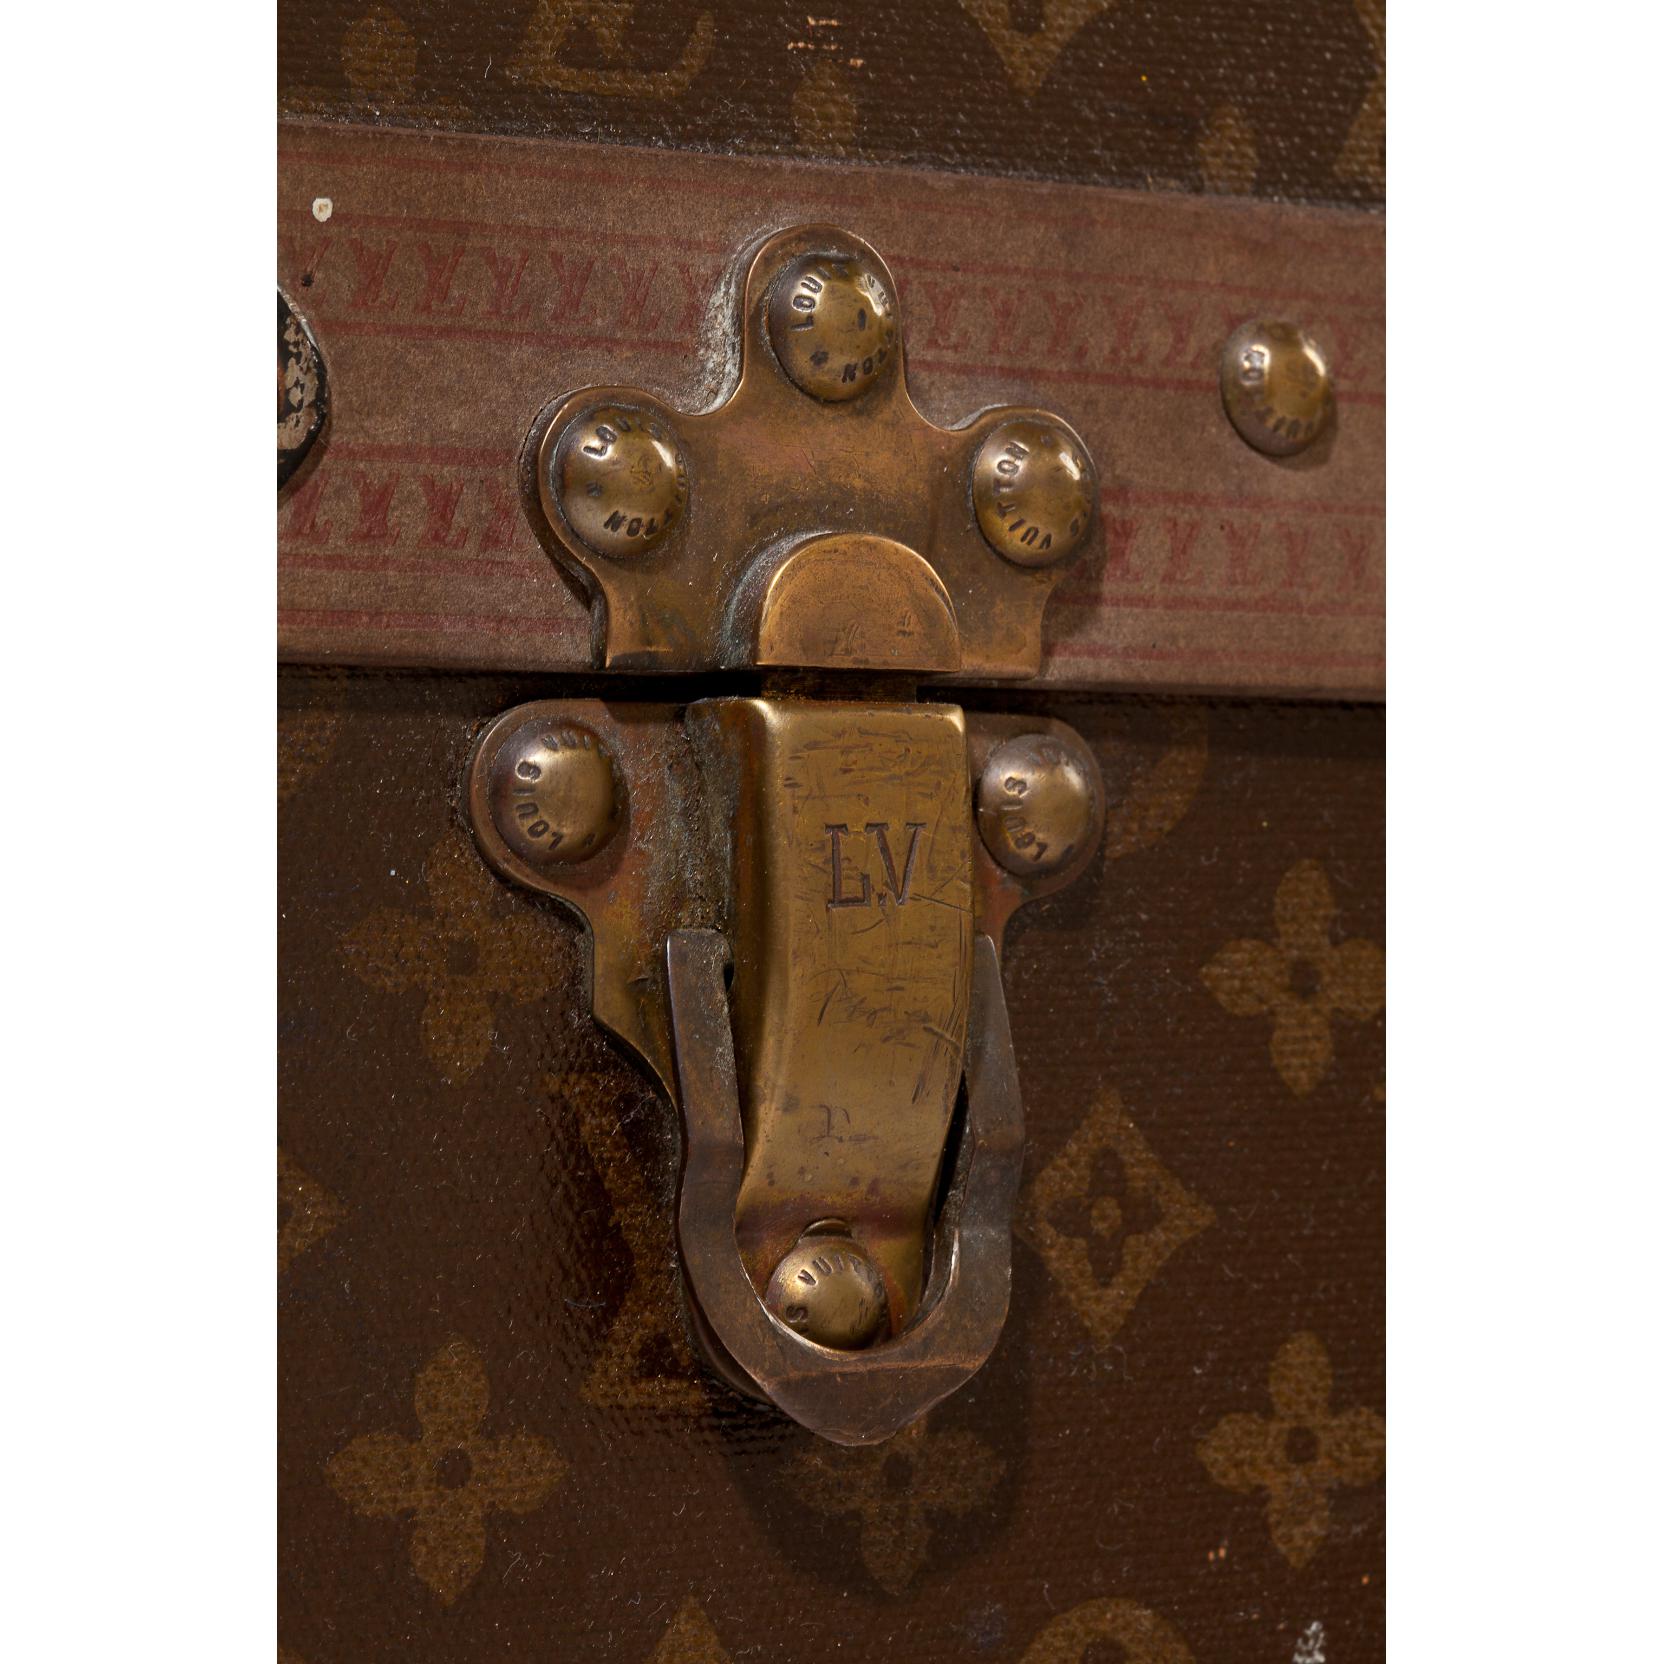 Vintage Louis Vuitton Footlocker Trunk (Lot 382 - Fall Estate Catalogued  AuctionSep 13, 2012, 10:00am)